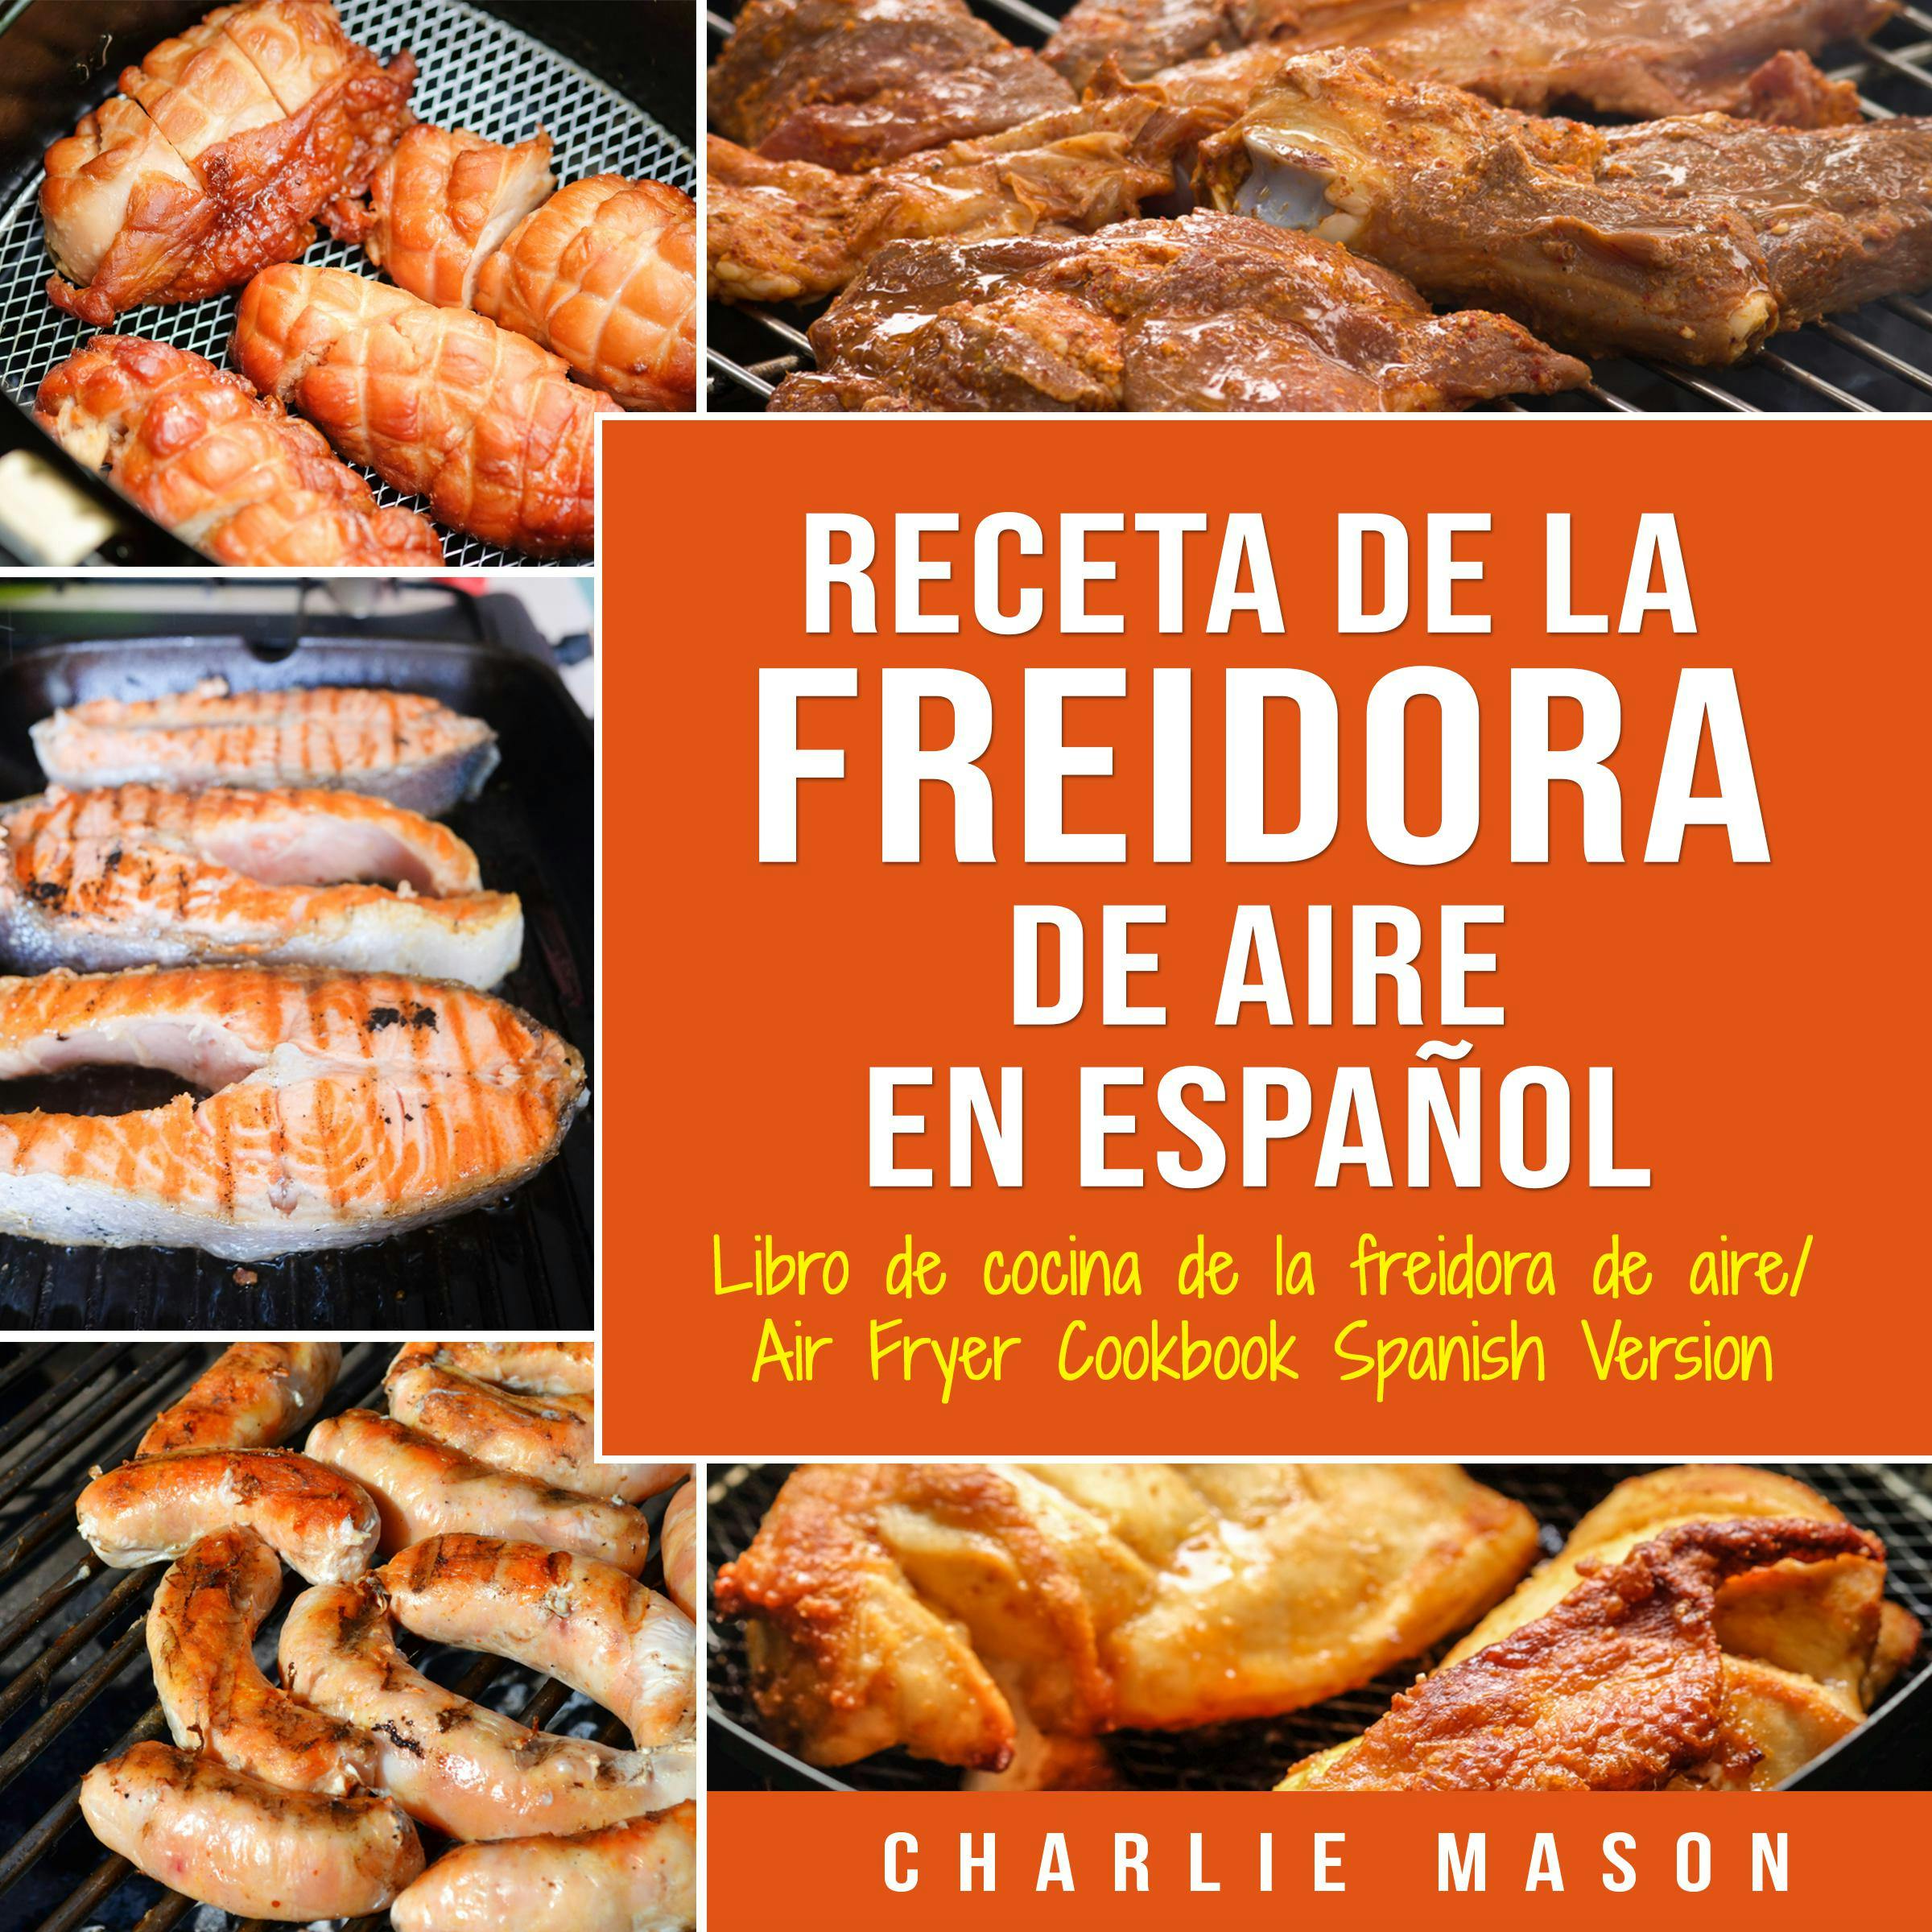 Recetas de Cocina con Freidora de Aire En Español/ Air Fryer Cookbook Recipes In Spanish - Charlie Mason